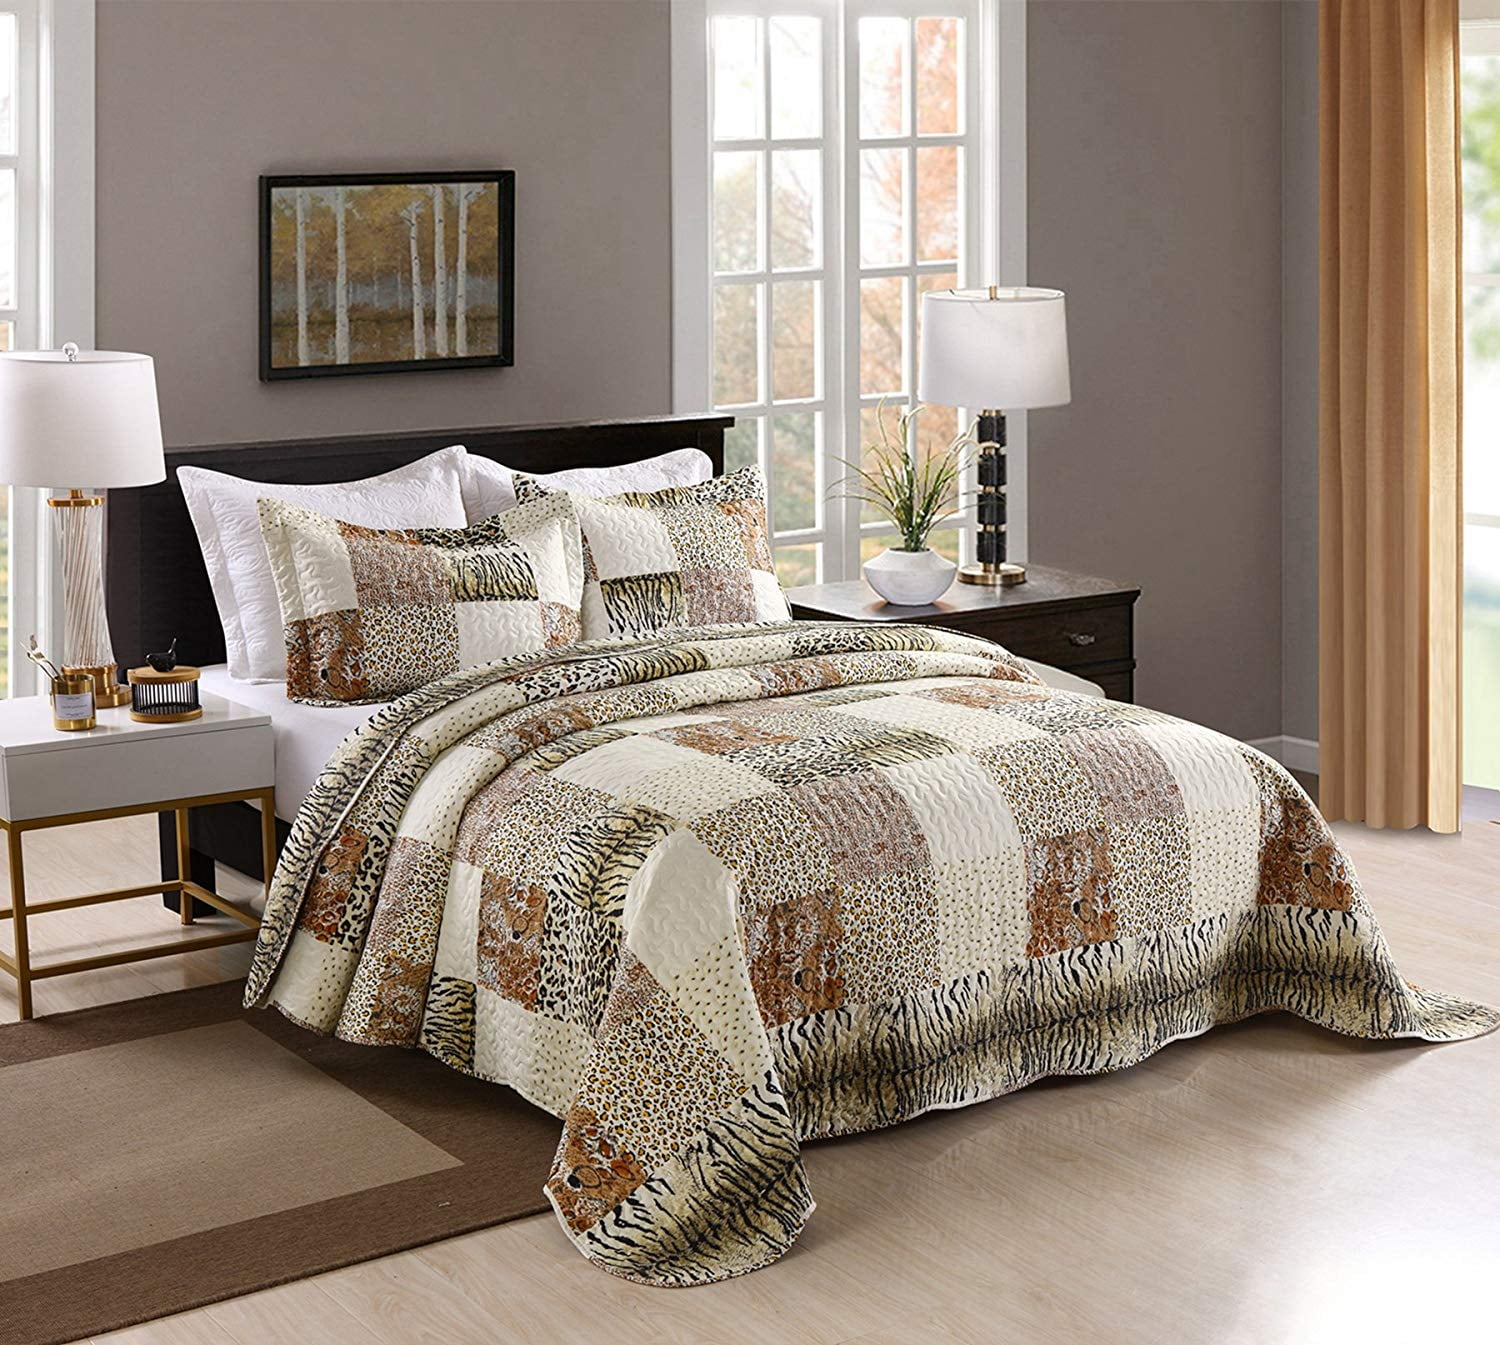 Leopard Chita Comforter Luxury Bedding Blanket Sherpa KING Soft Animal Print NEW 